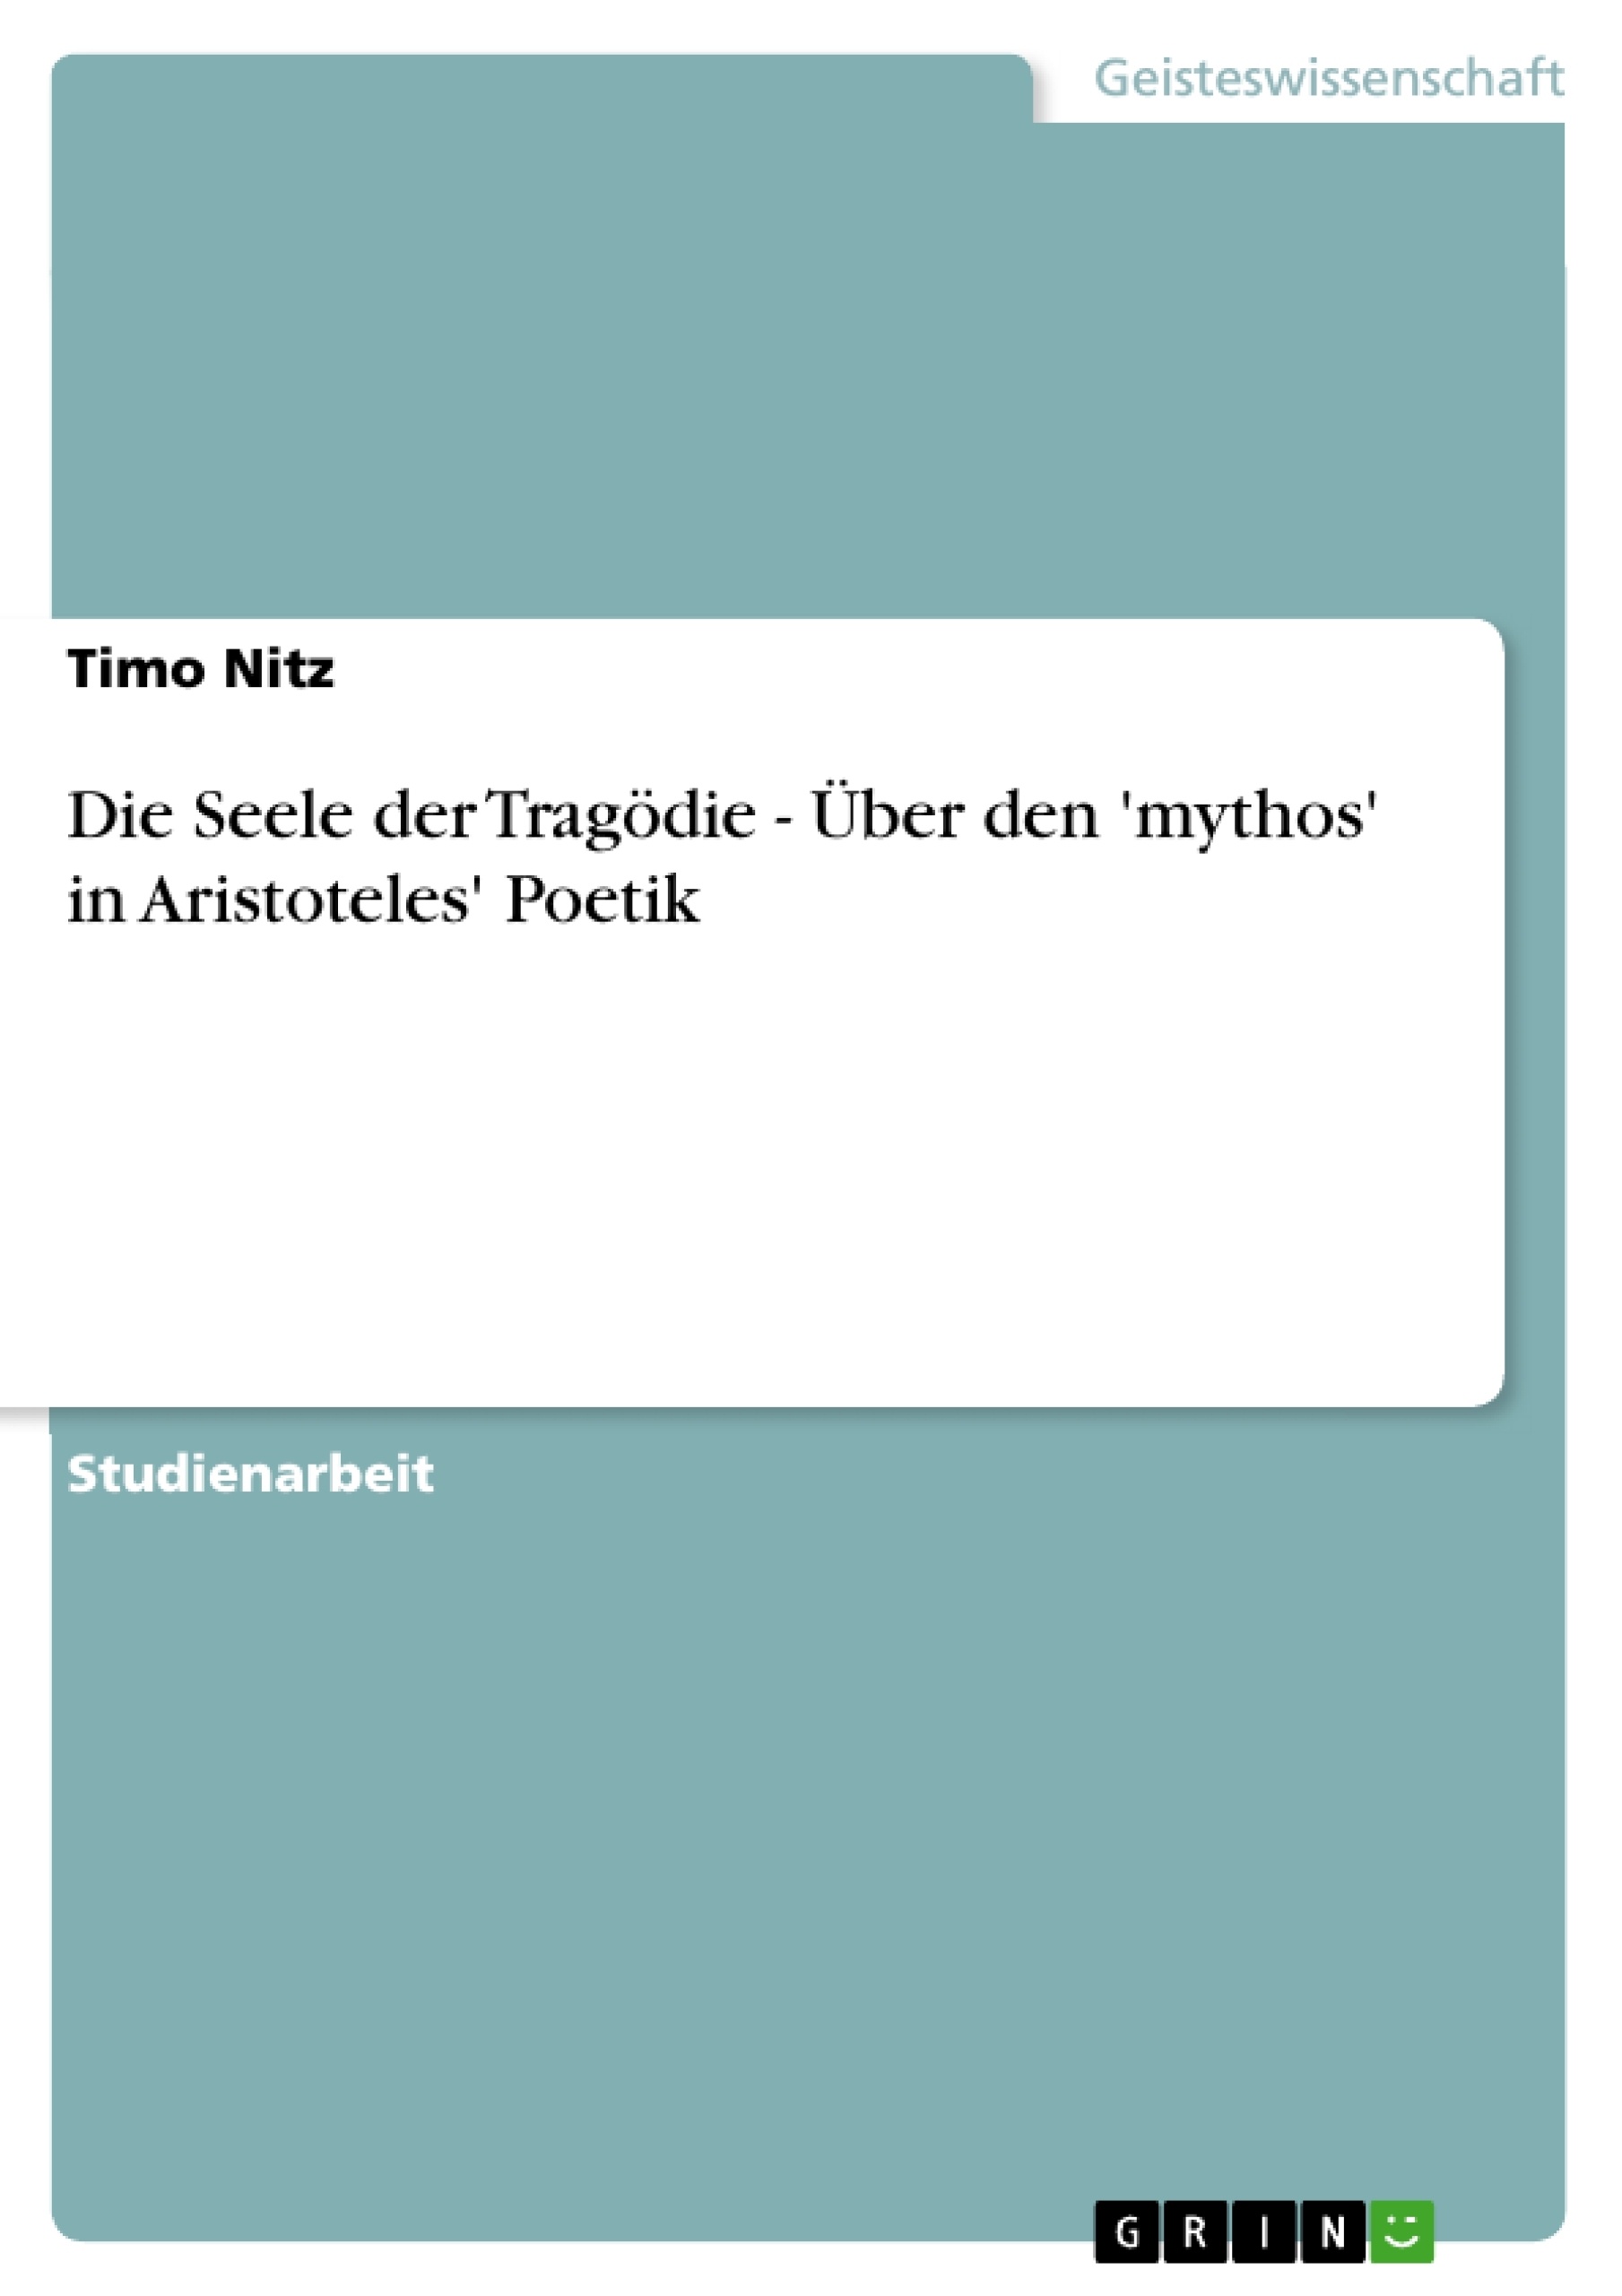 Titre: Die Seele der Tragödie - Über den 'mythos' in Aristoteles' Poetik